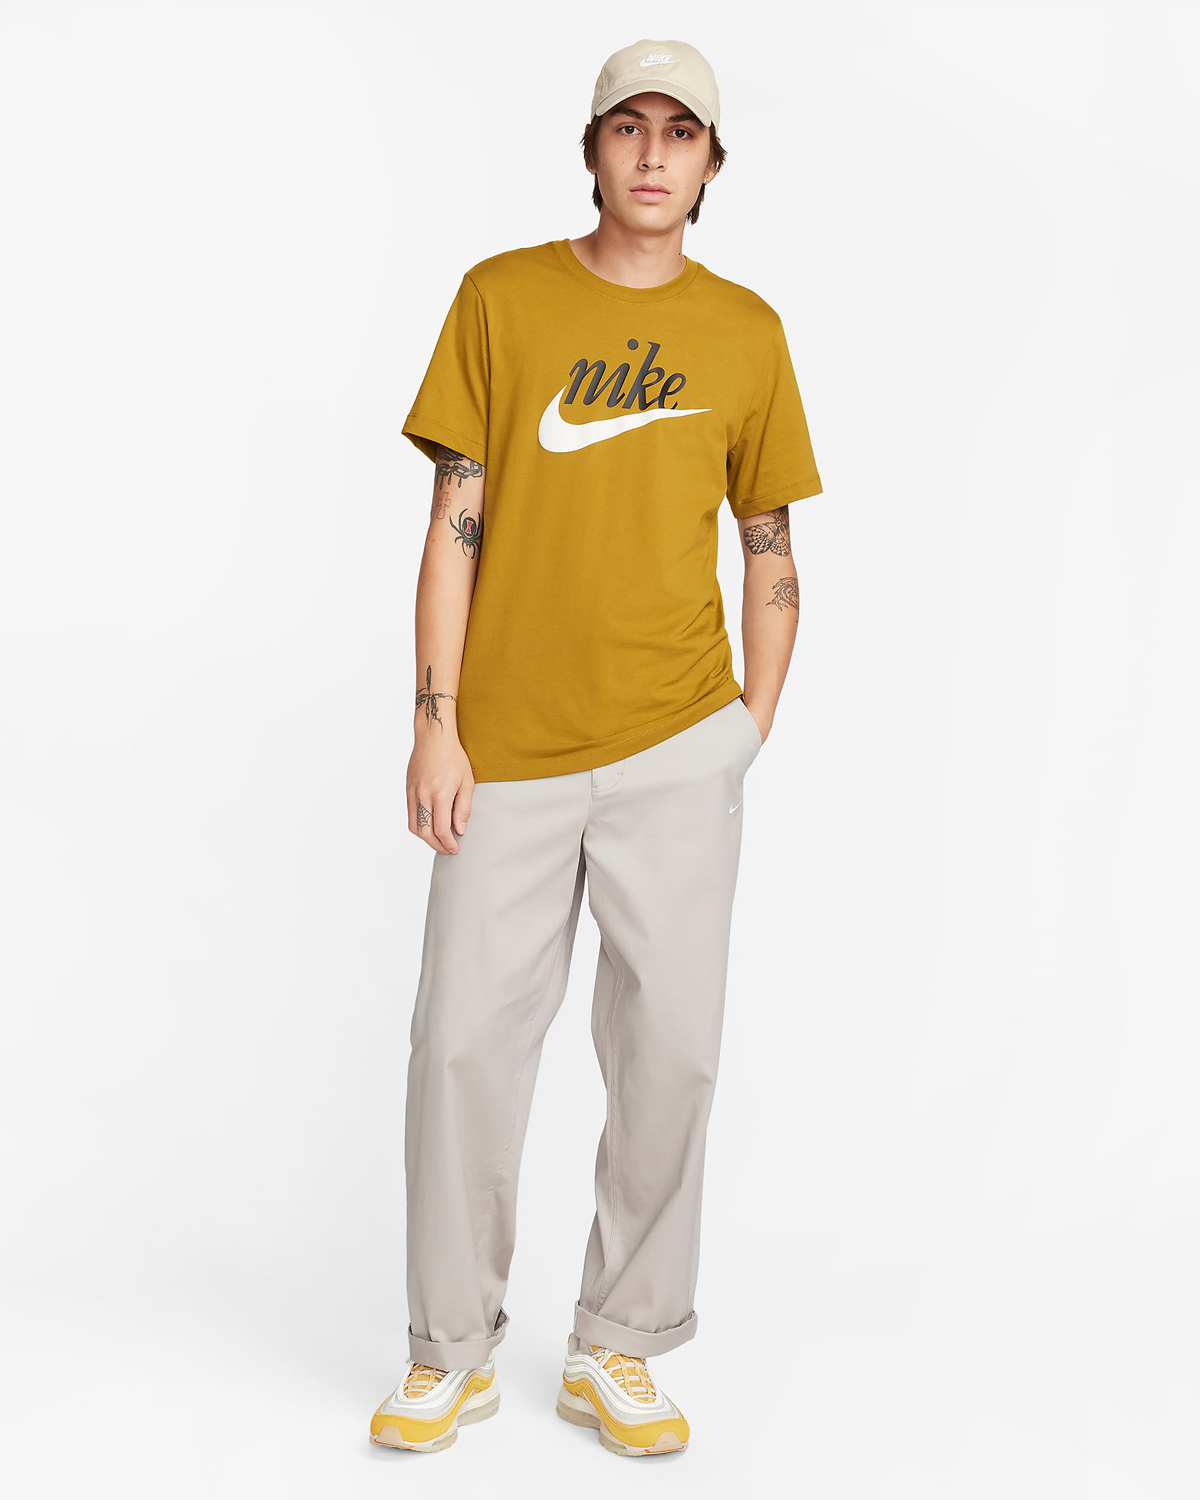 Nike-Sportswear-T-Shirt-Bronzine-Outfit